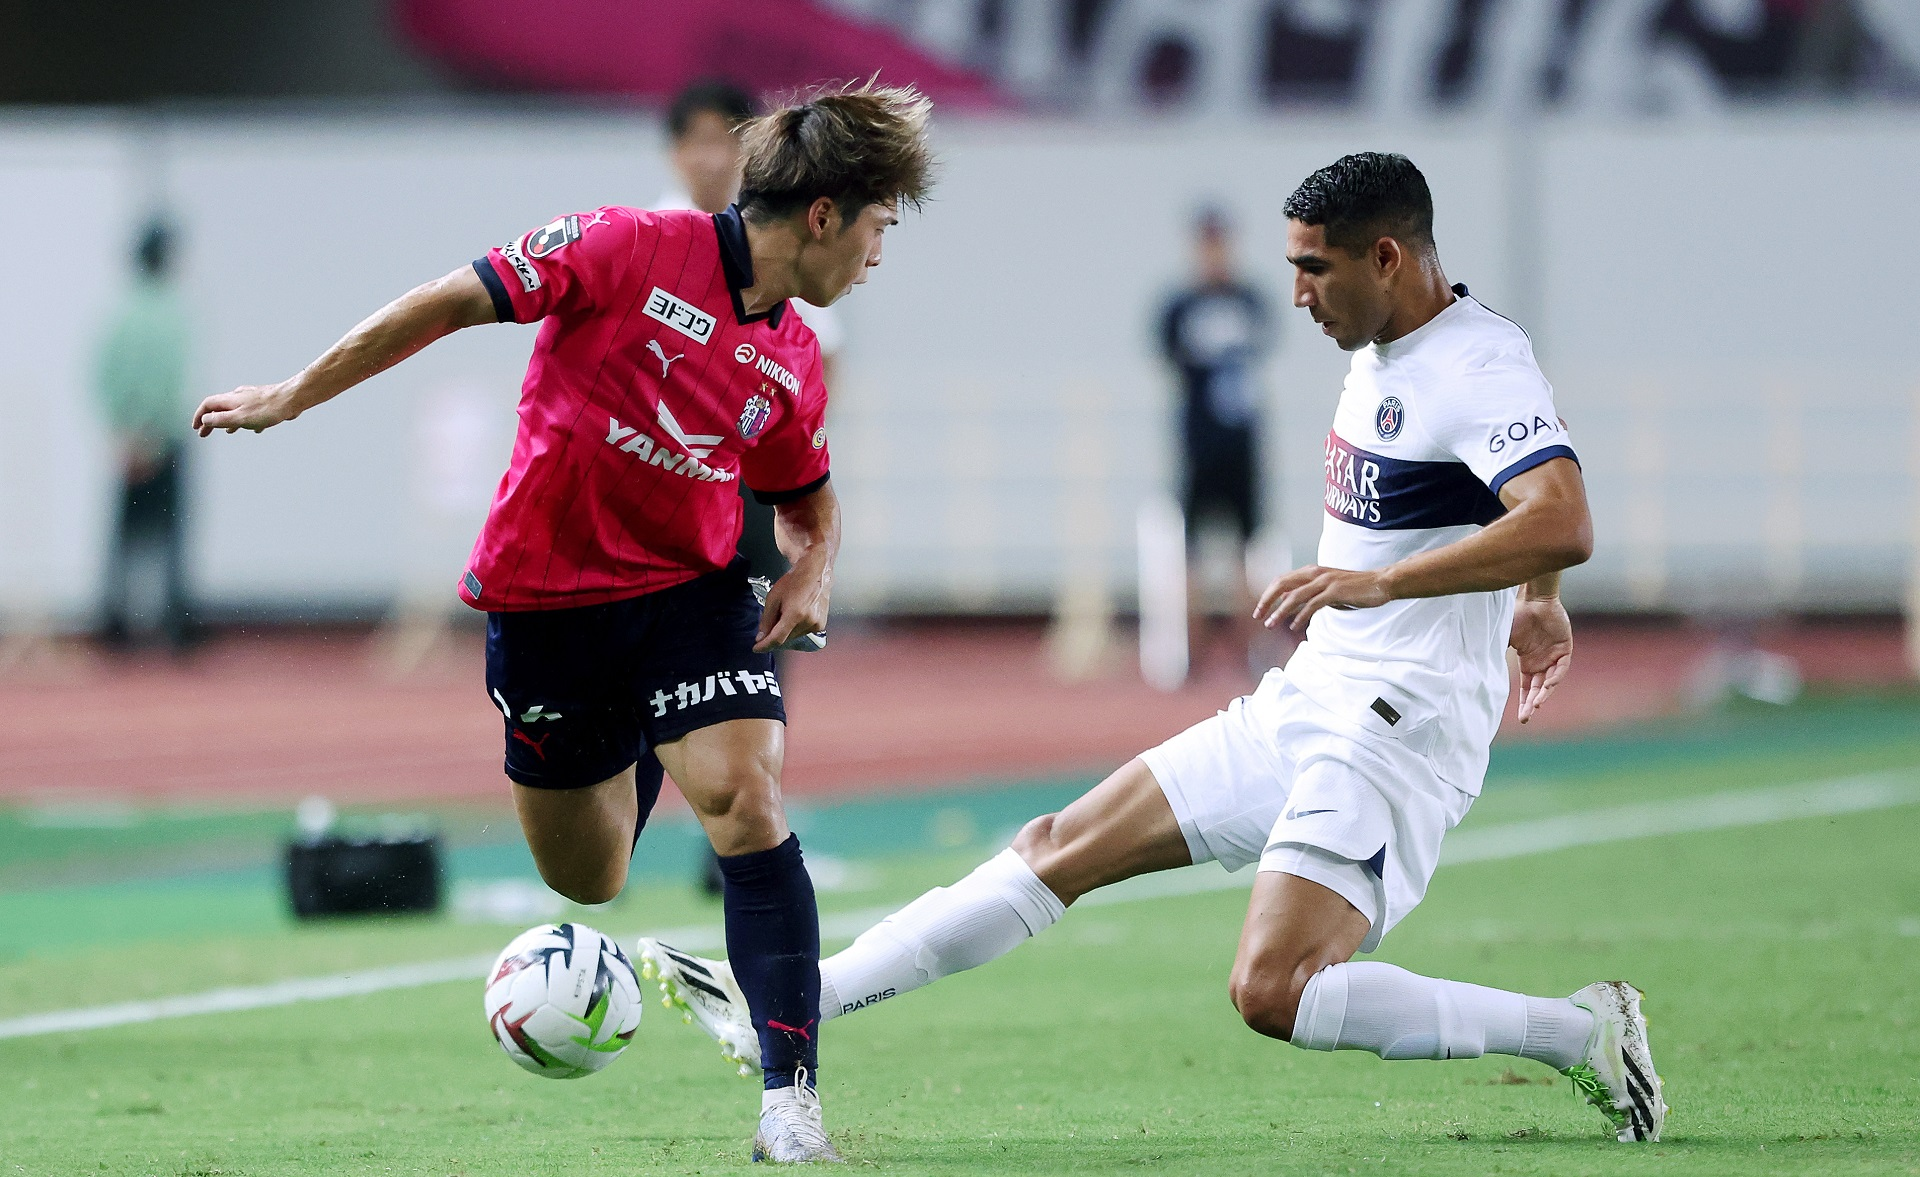 Football: Shinji Kagawa nets winner as Cerezo edge PSG 3-2 in friendly